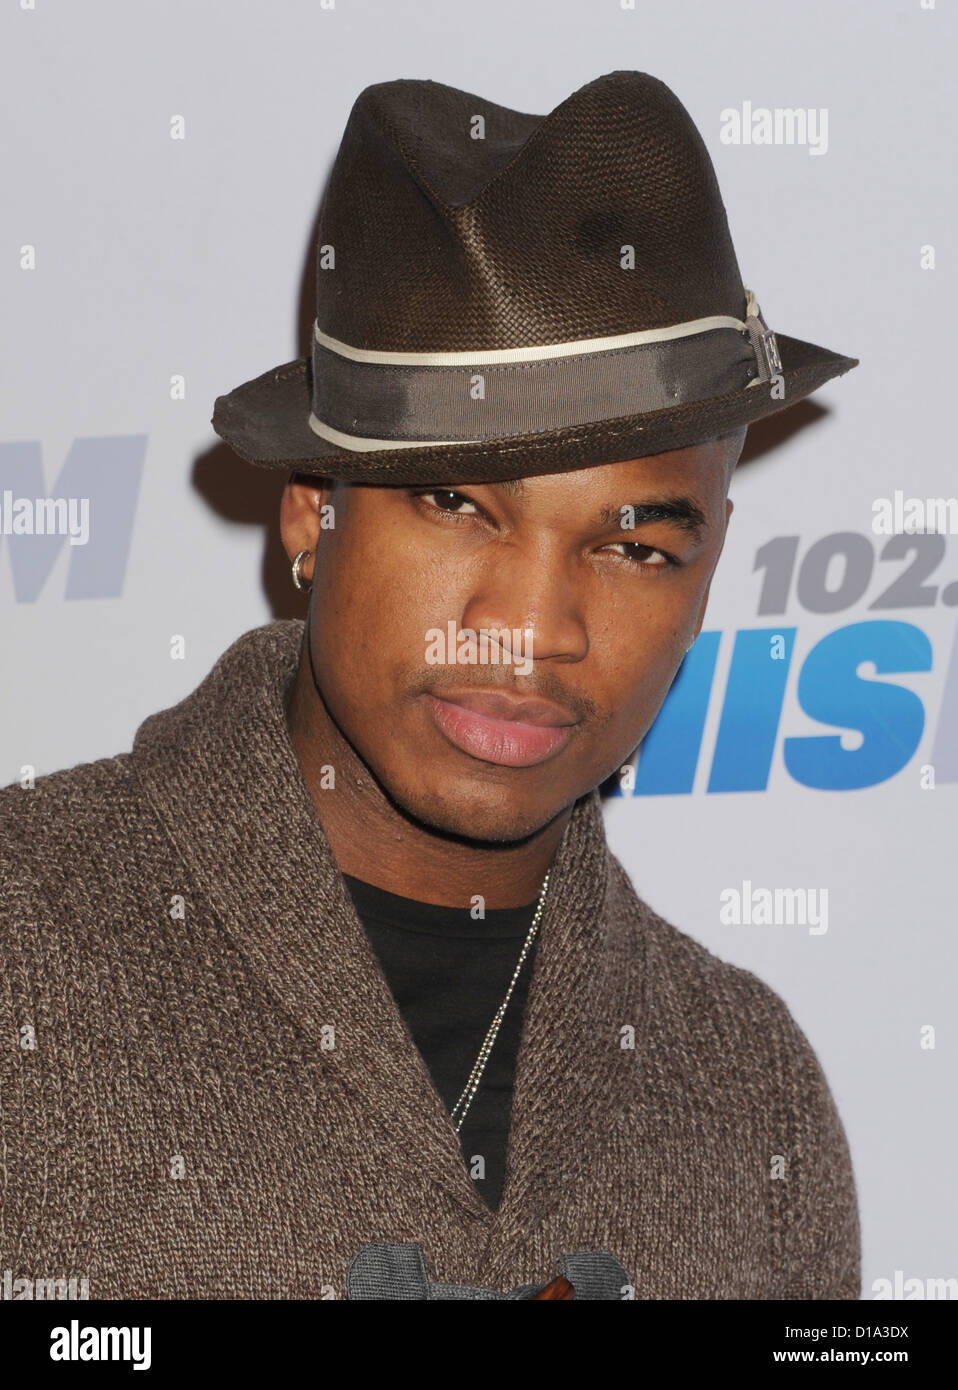 NE-YO US rap musician in December 2012. Photo Jeffrey Mayer Stock Photo